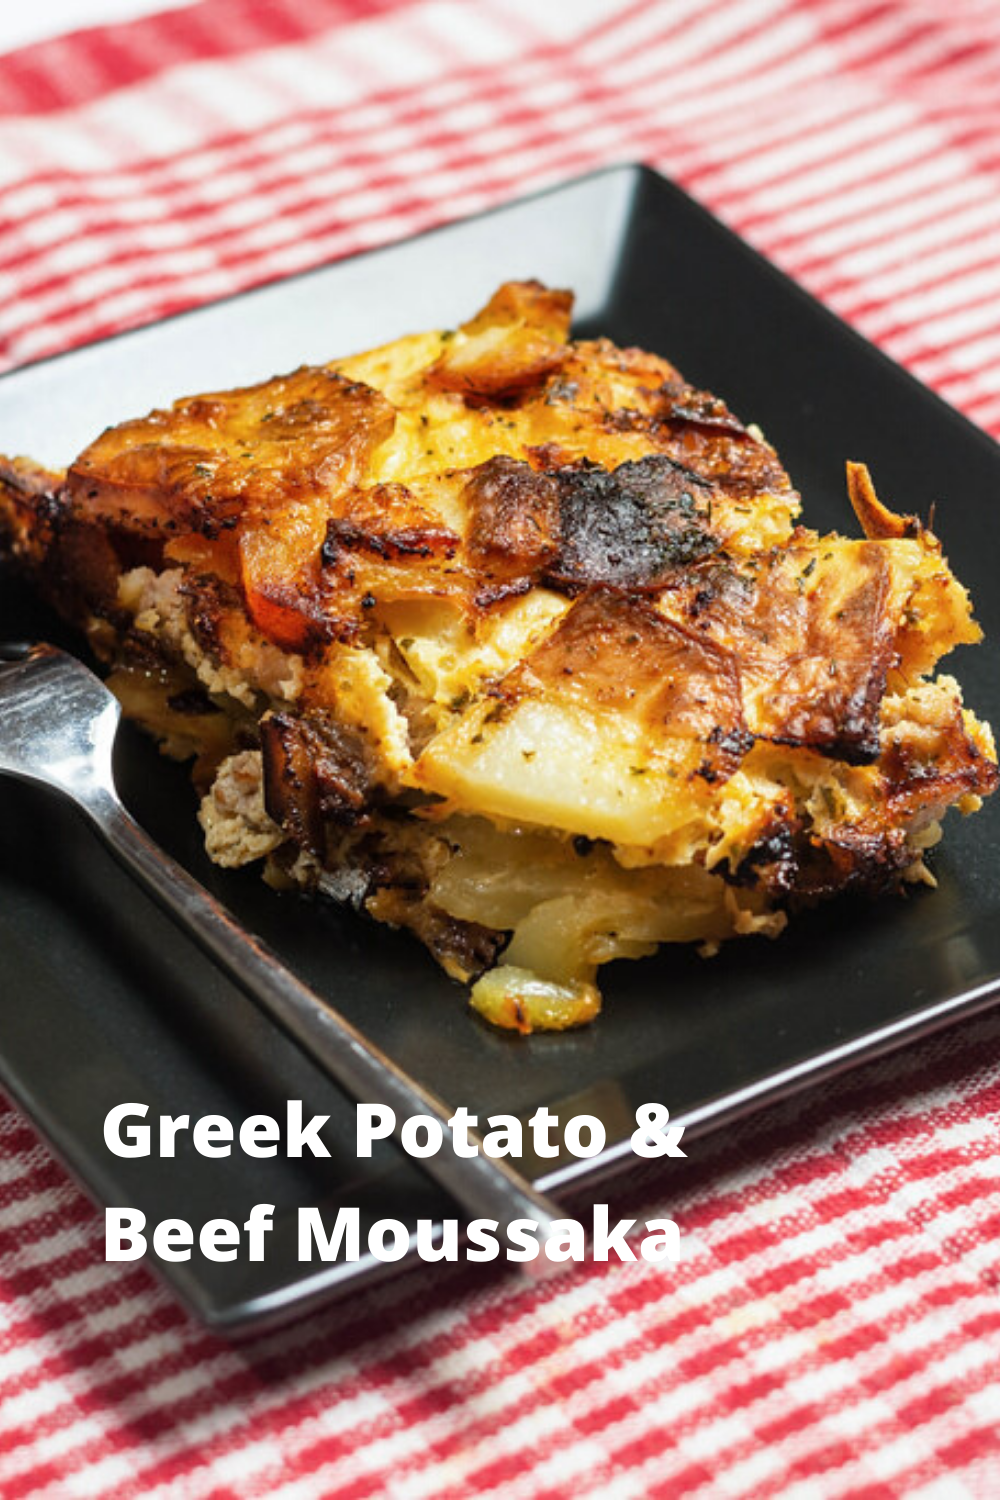 Greek Potato & Beef Moussaka